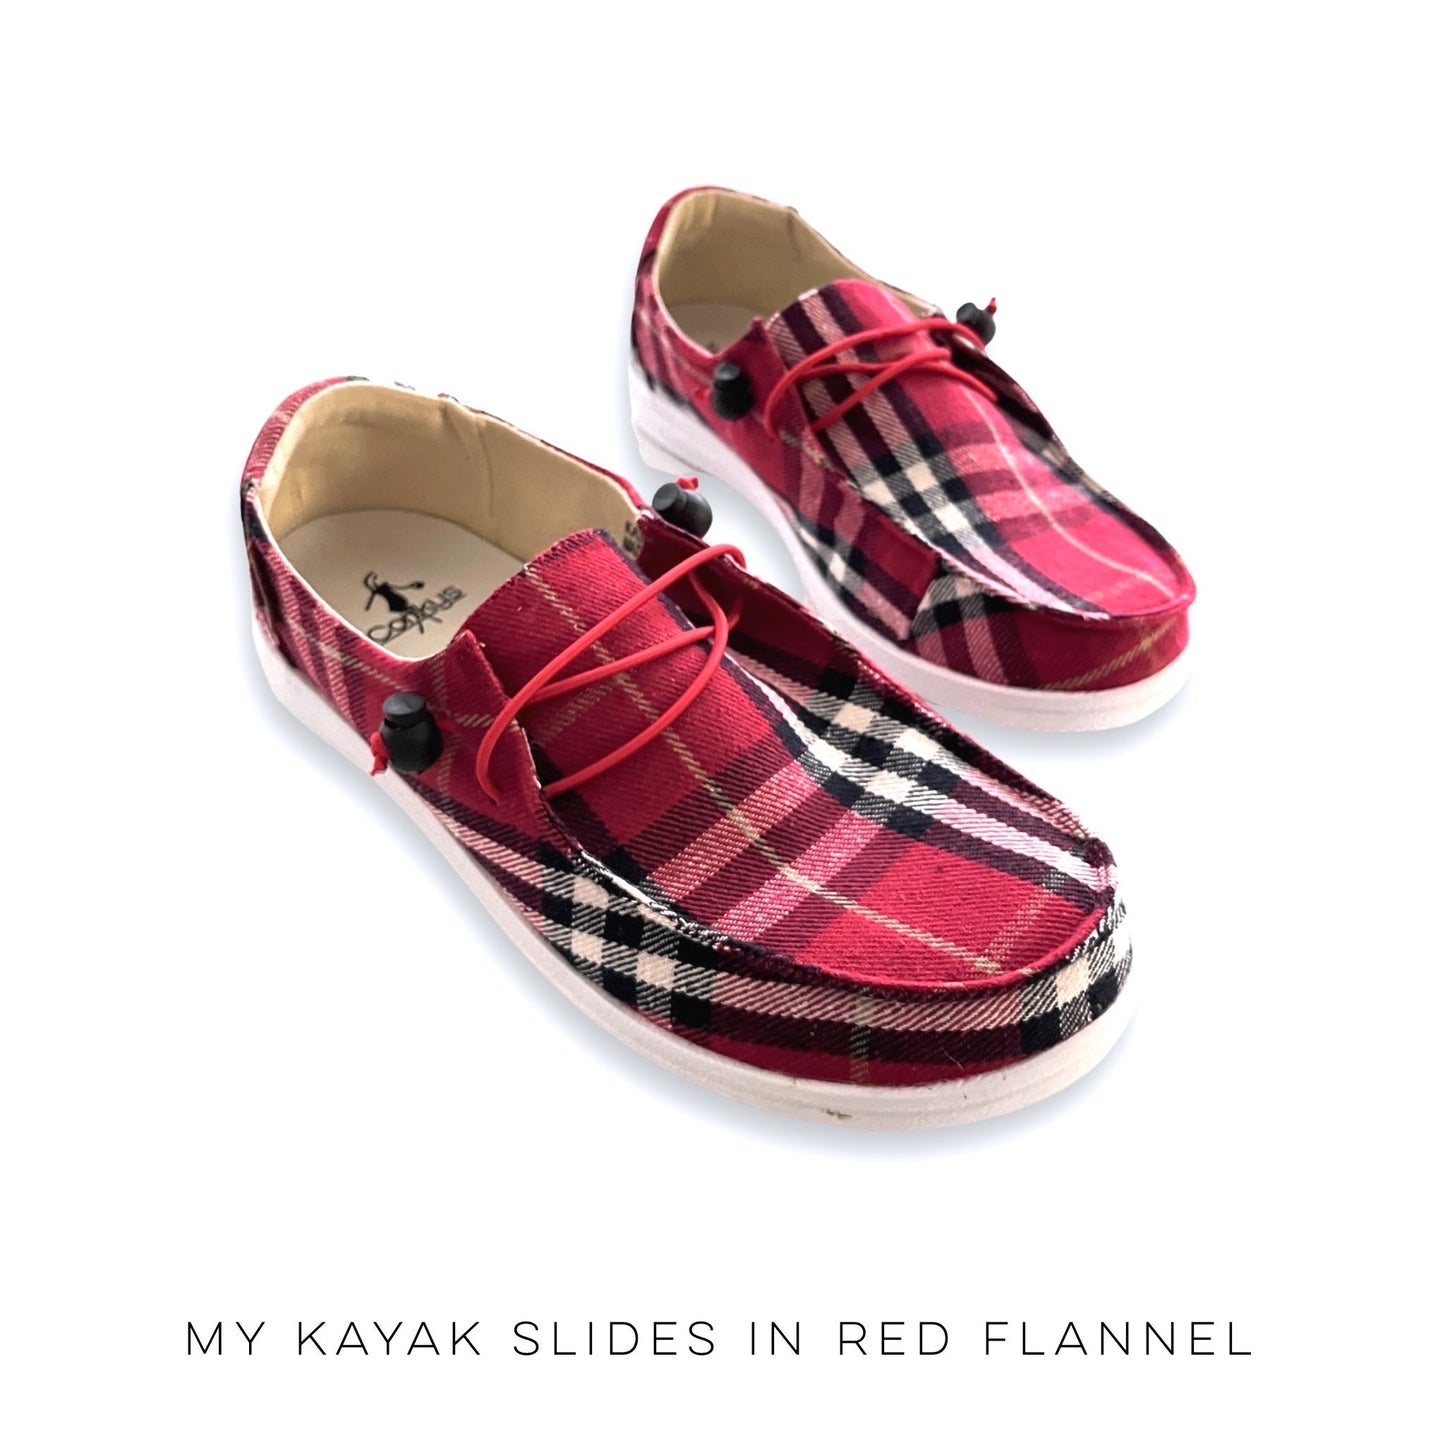 My Kayak Slides in Red Flannel